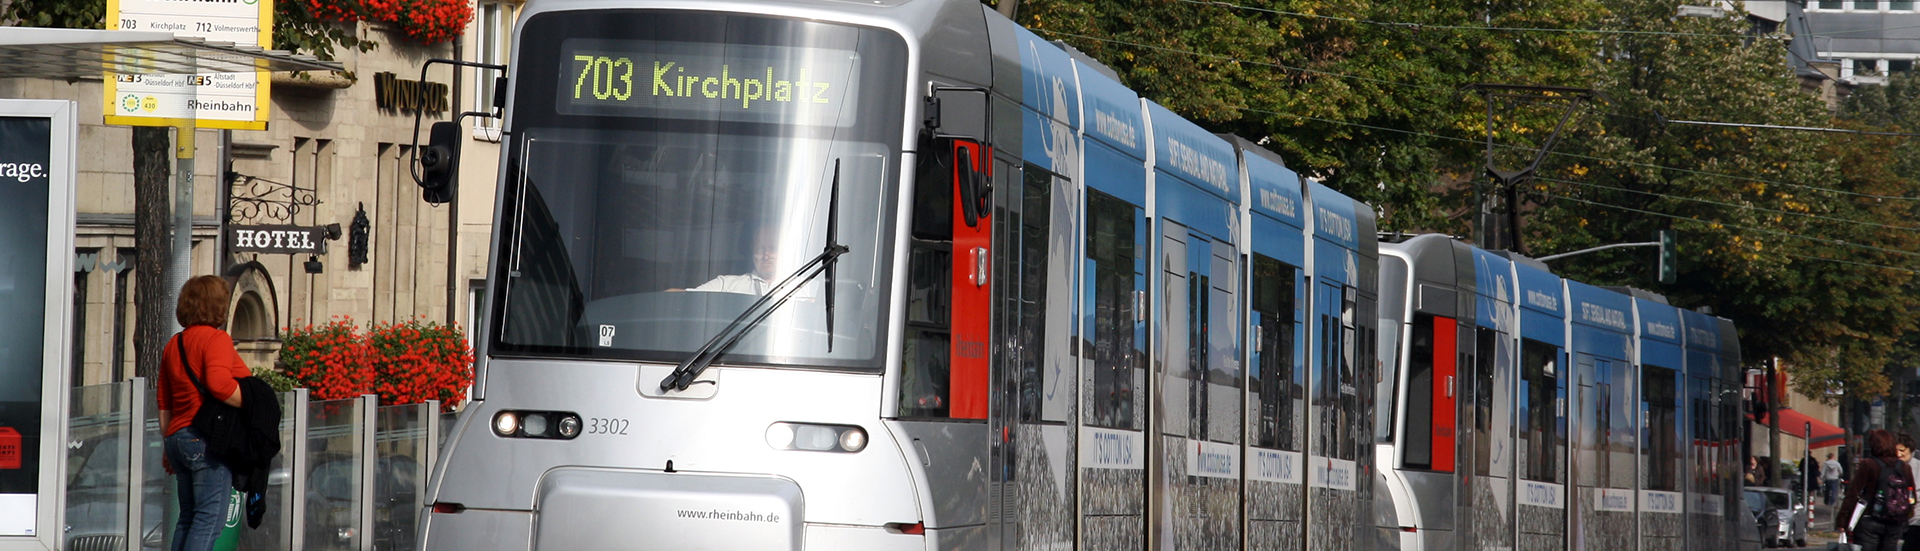 TETRA For German Public Transport